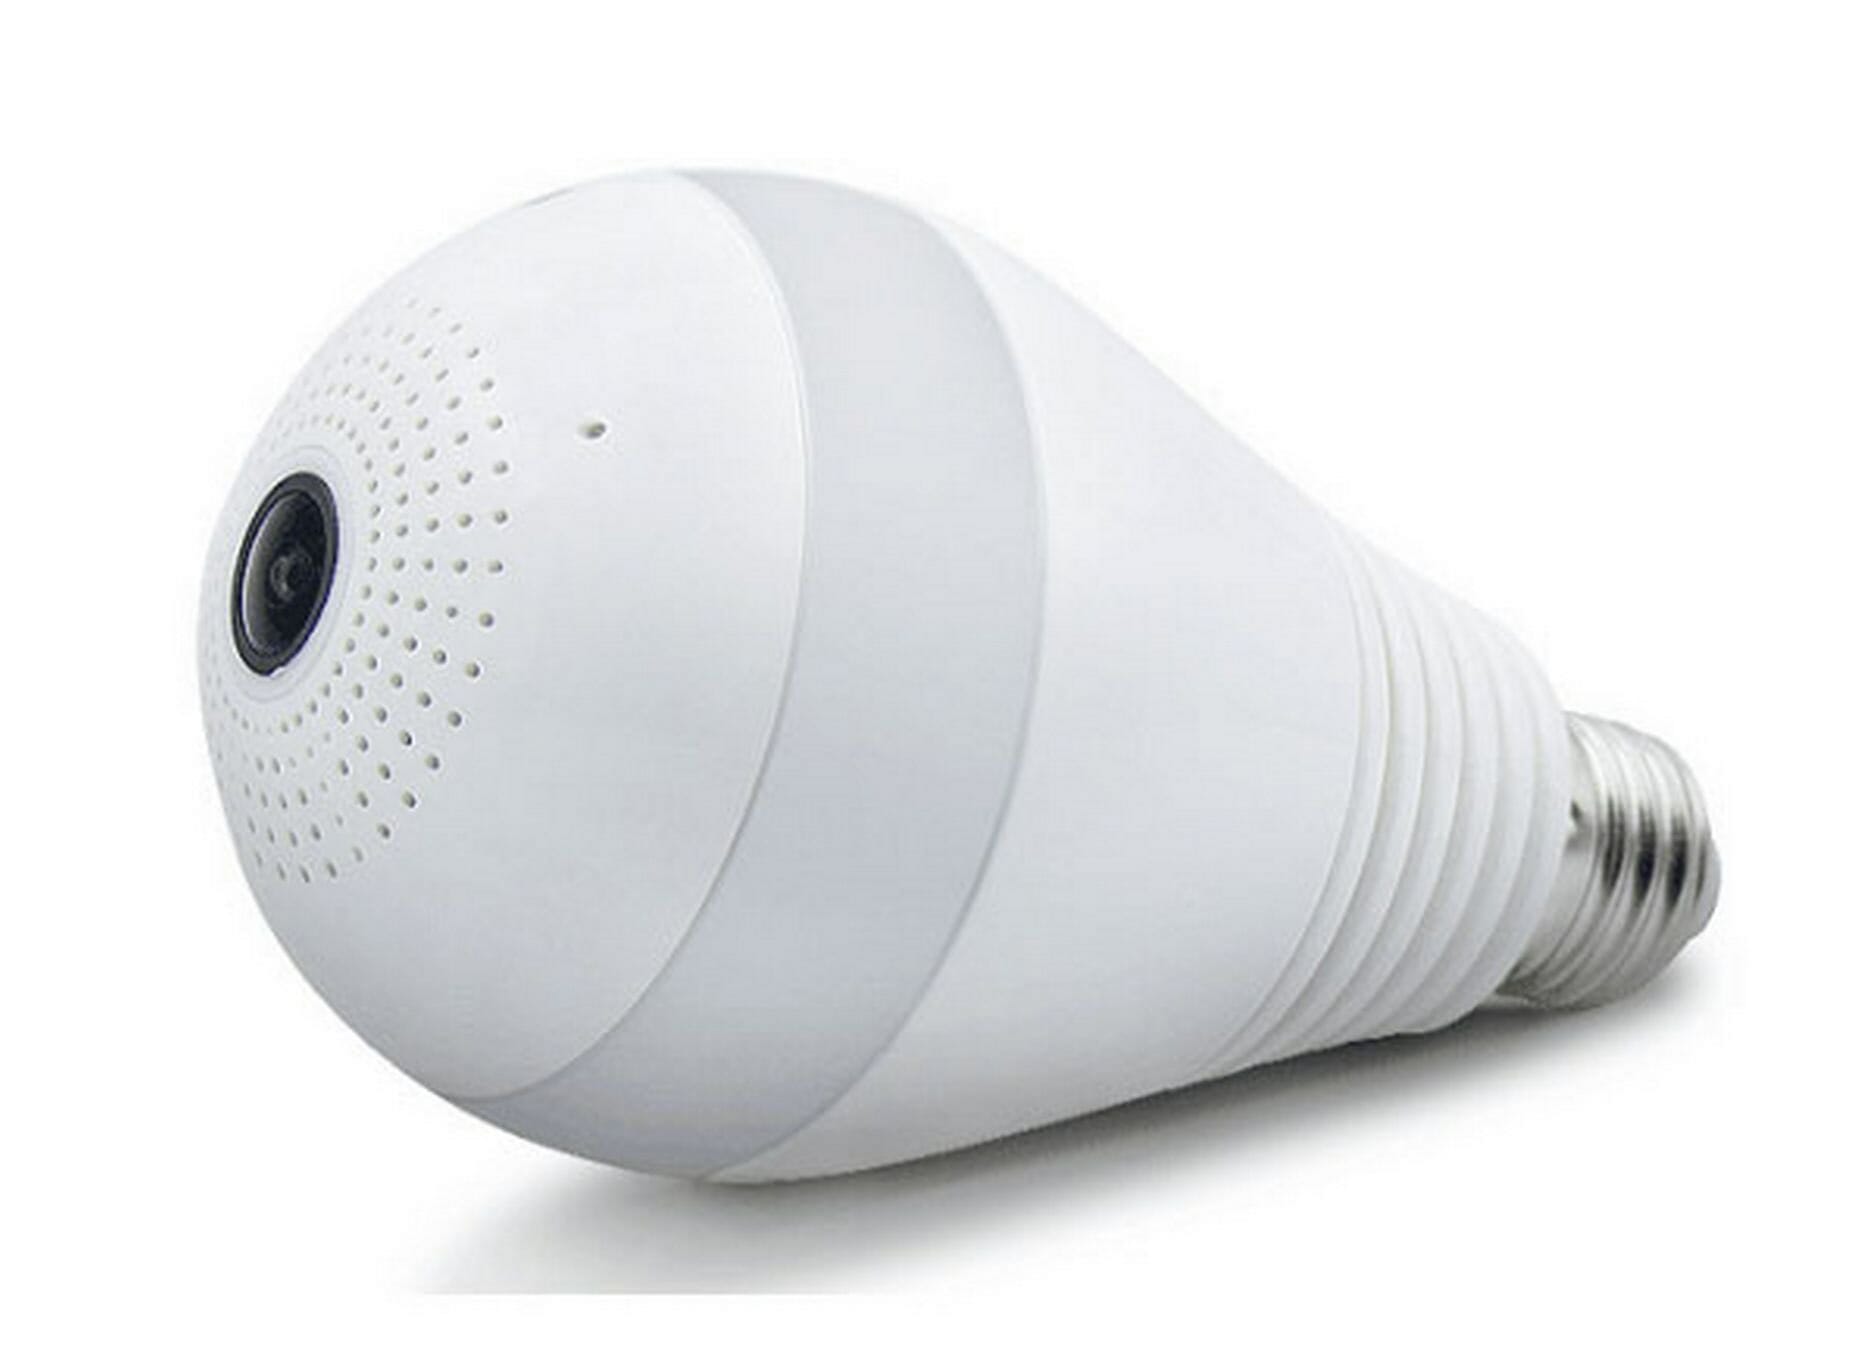 light bulb with a built-in hidden camera